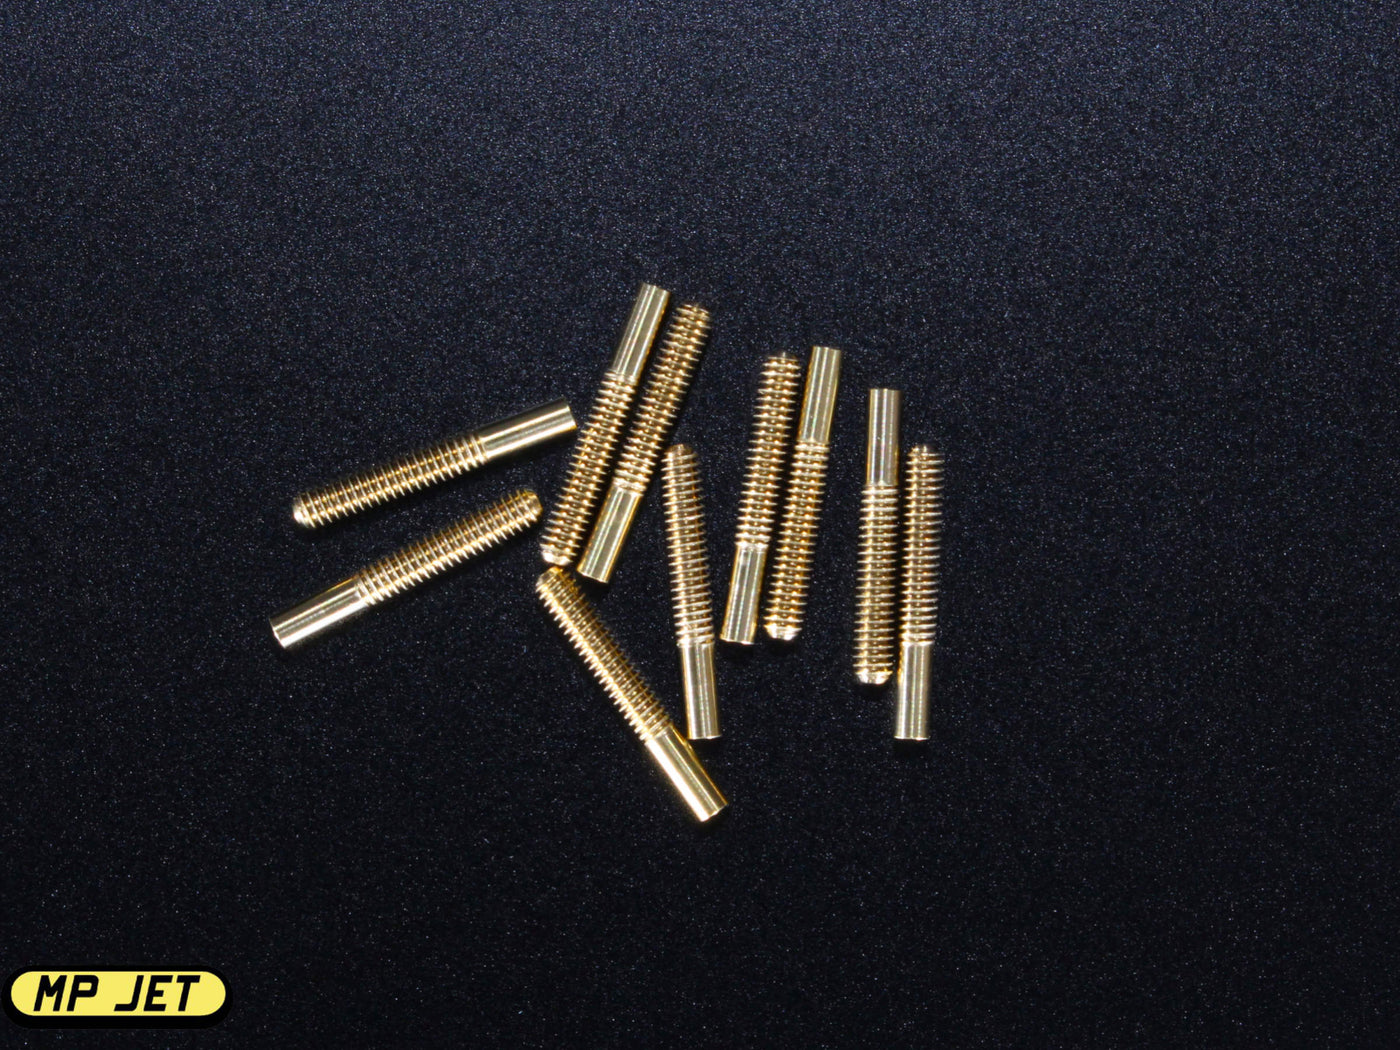 MP Jet Brass Threaded Coupler / Solder on / ID .8mm / 13.8mm long / M2 thread